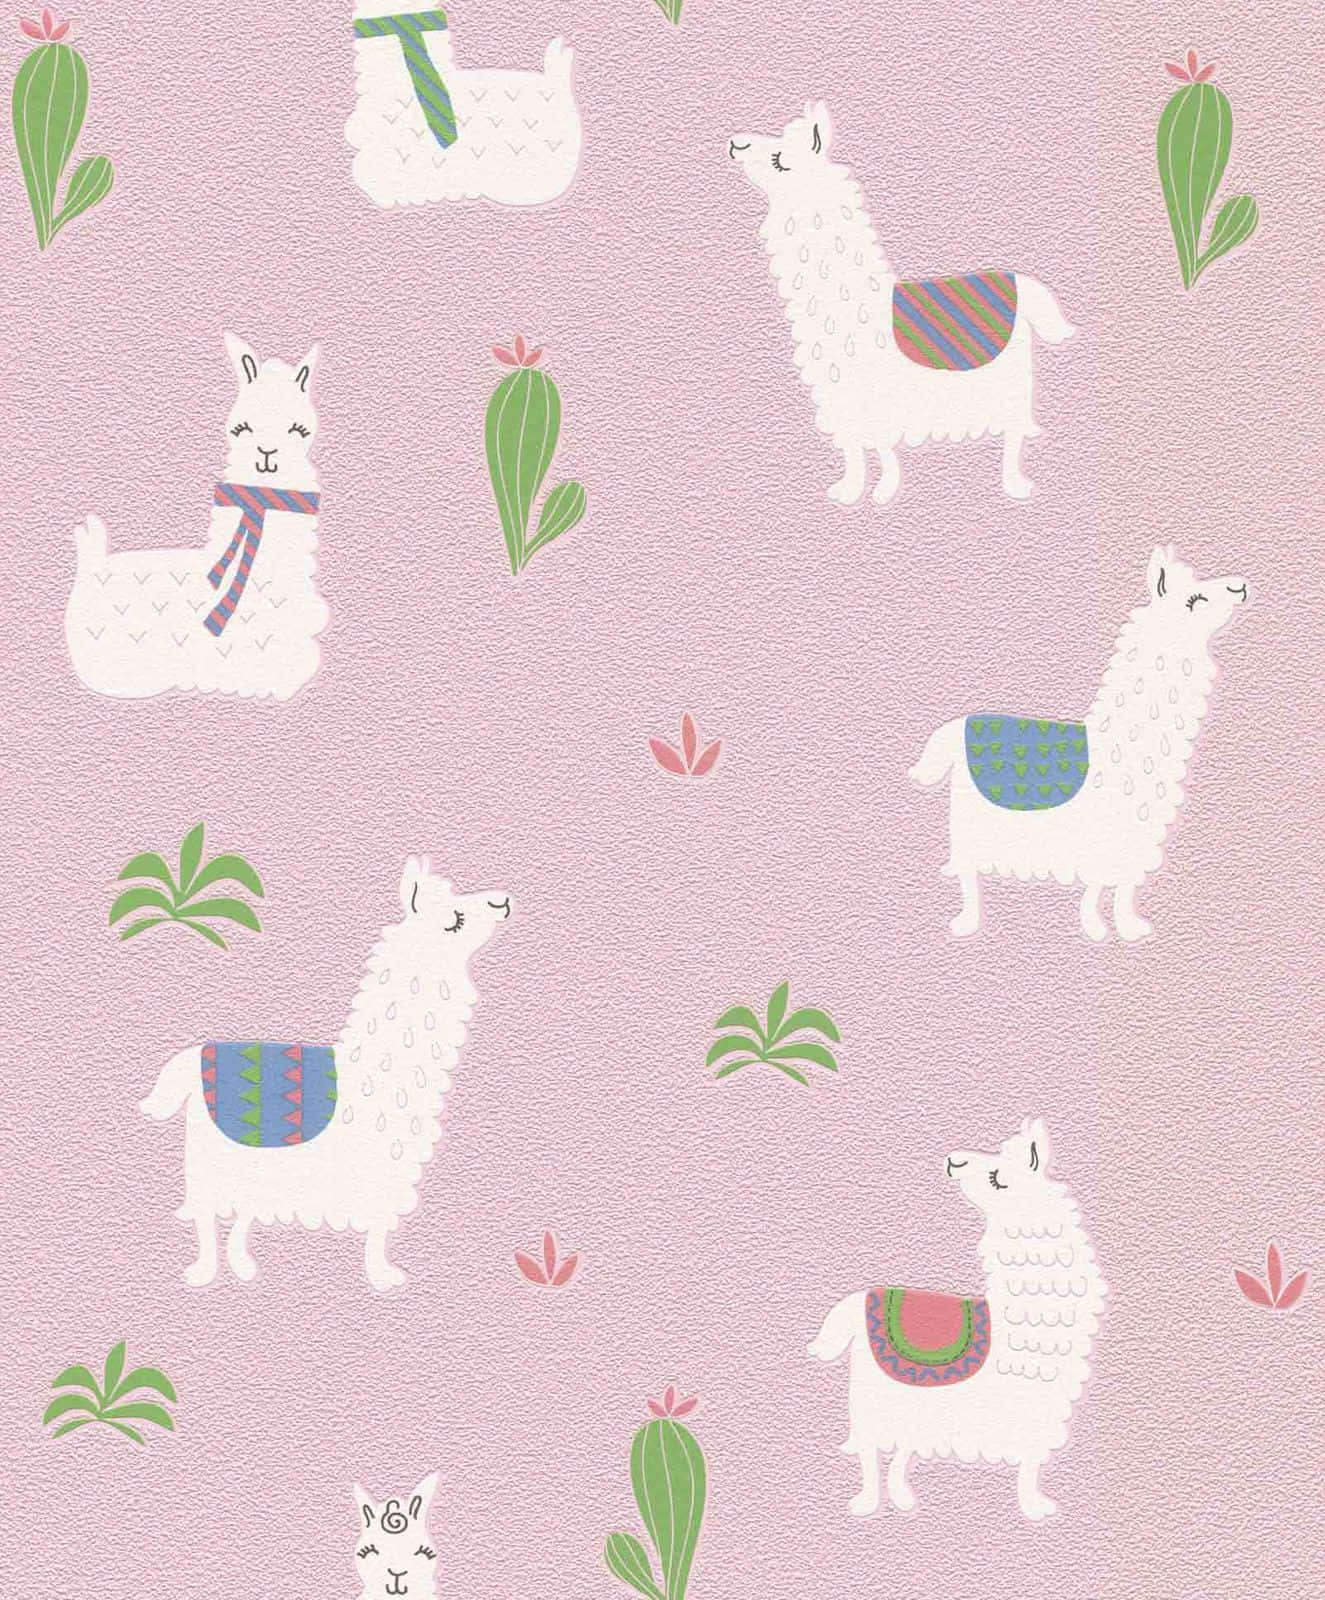 A close-up of an adorable llama Wallpaper